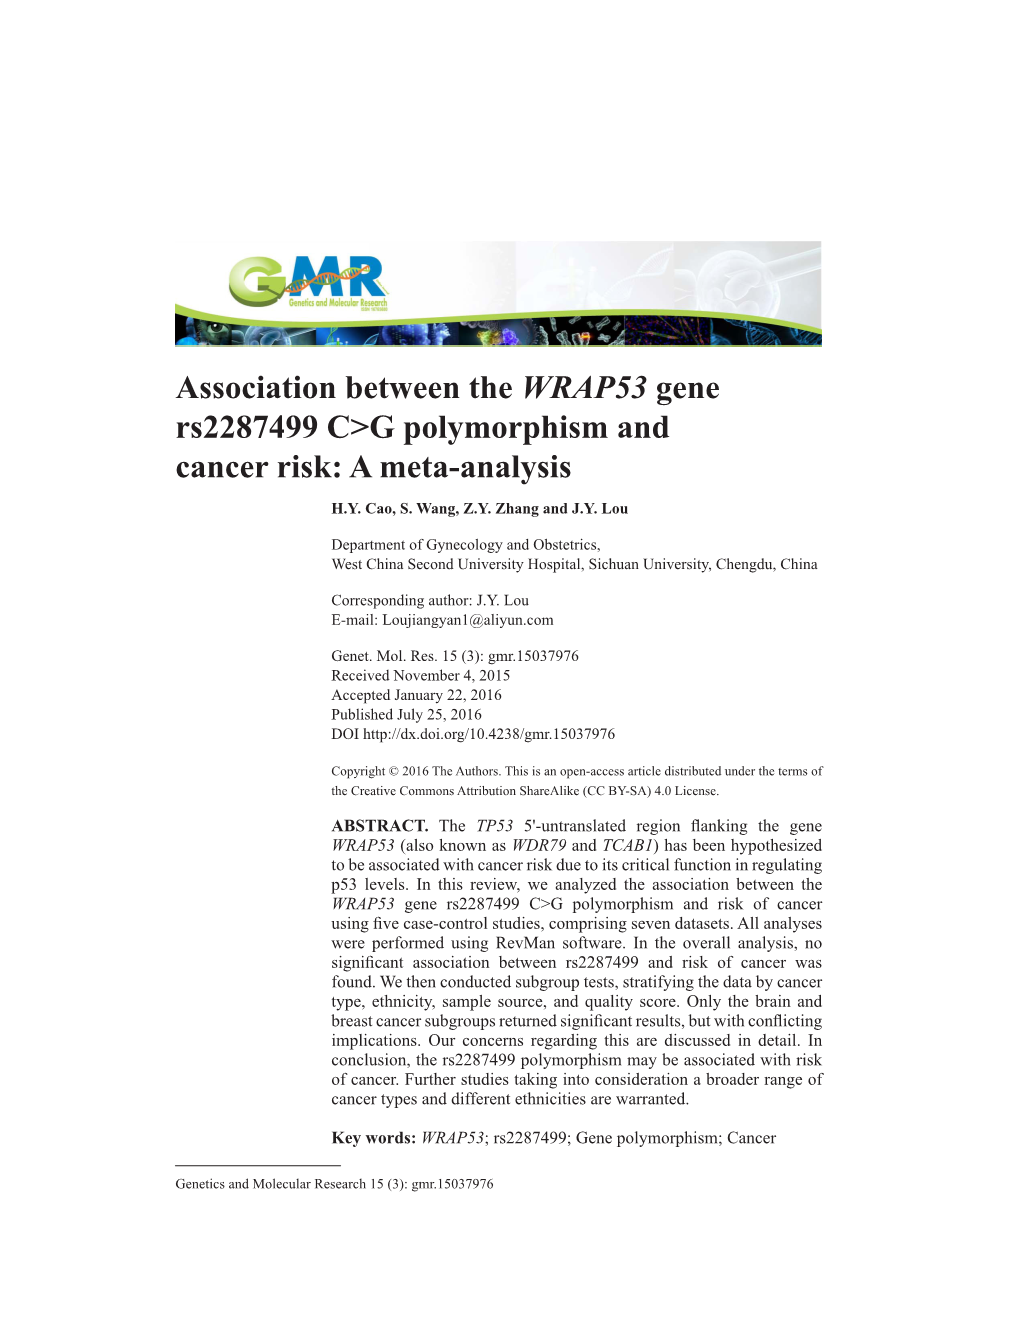 Association Between the WRAP53 Gene Rs2287499 C&gt;G